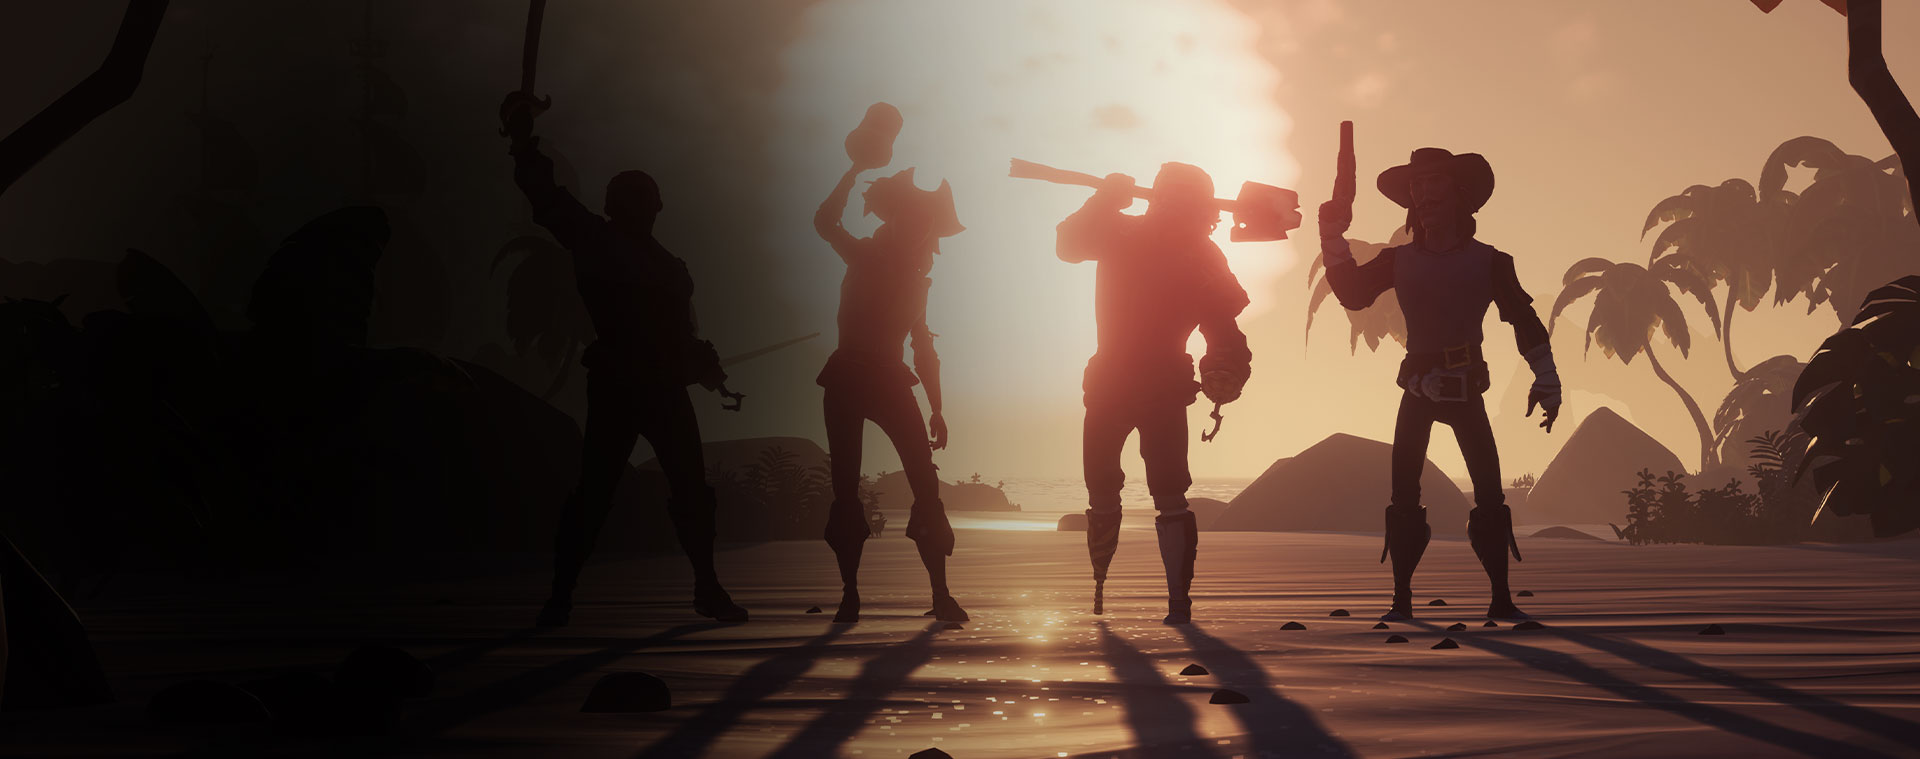 Vier personages uit Sea of Thieves die voor een zonsondergang poseren